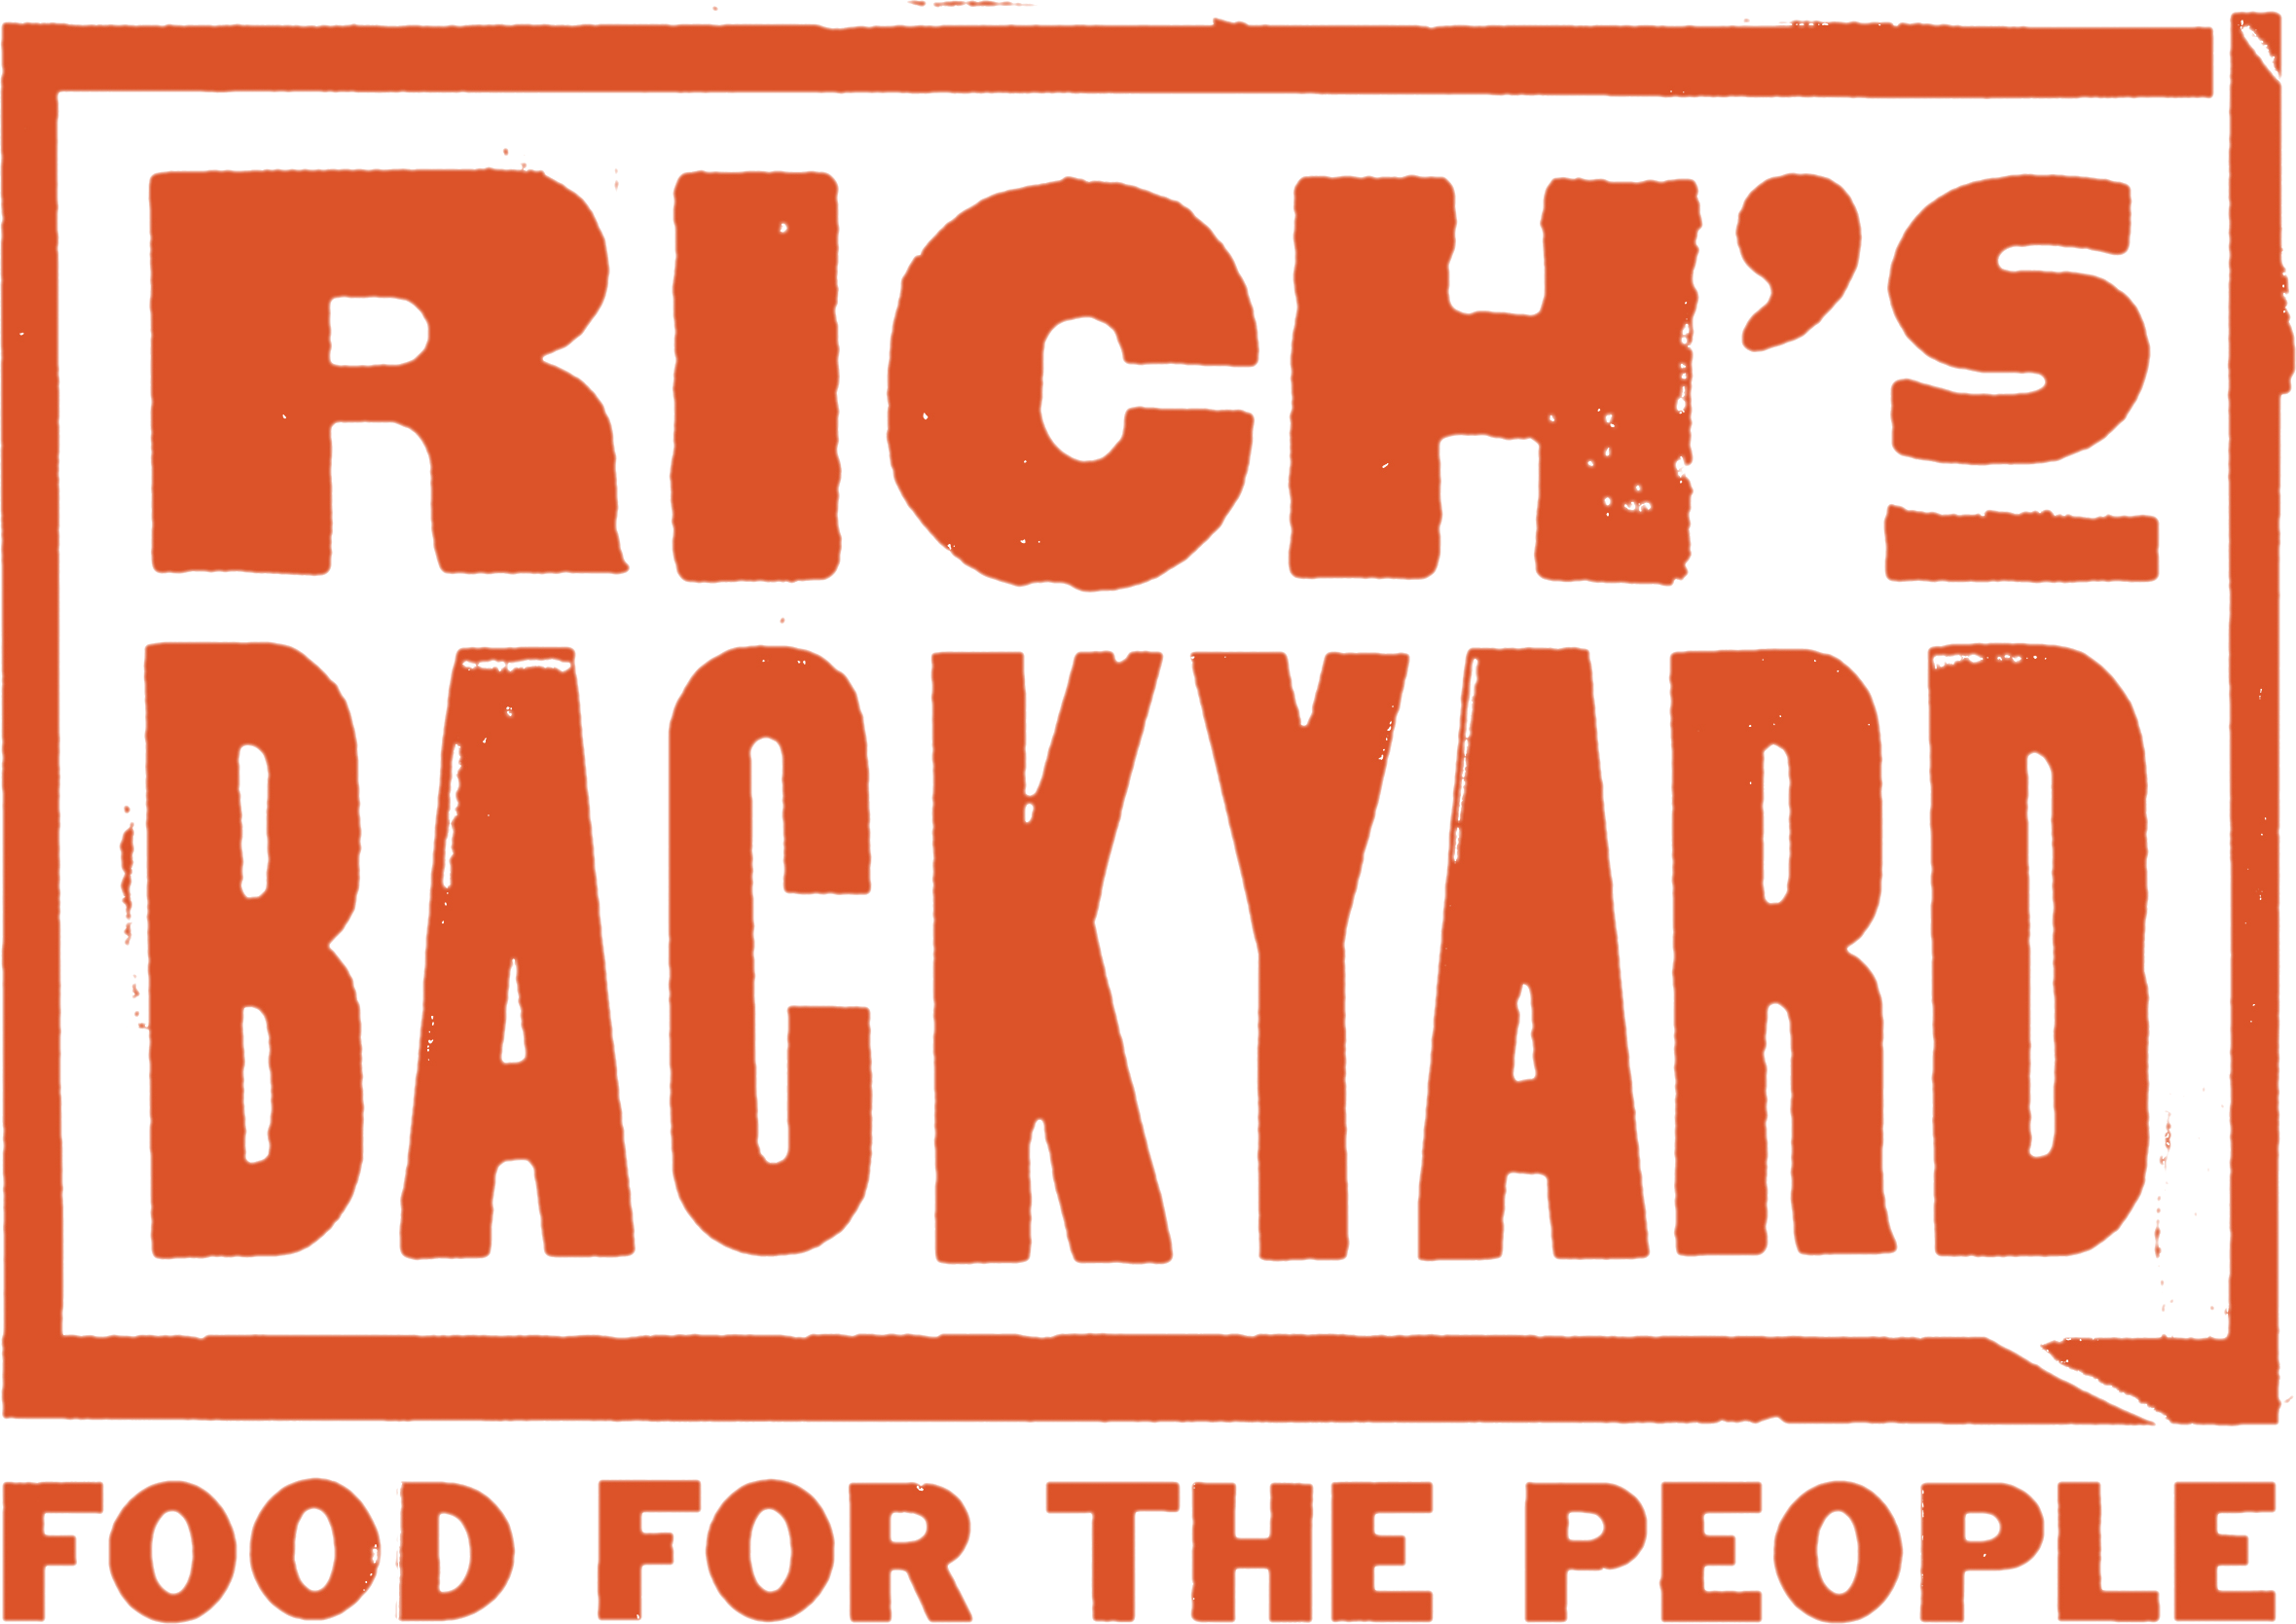 Rich's Backyard